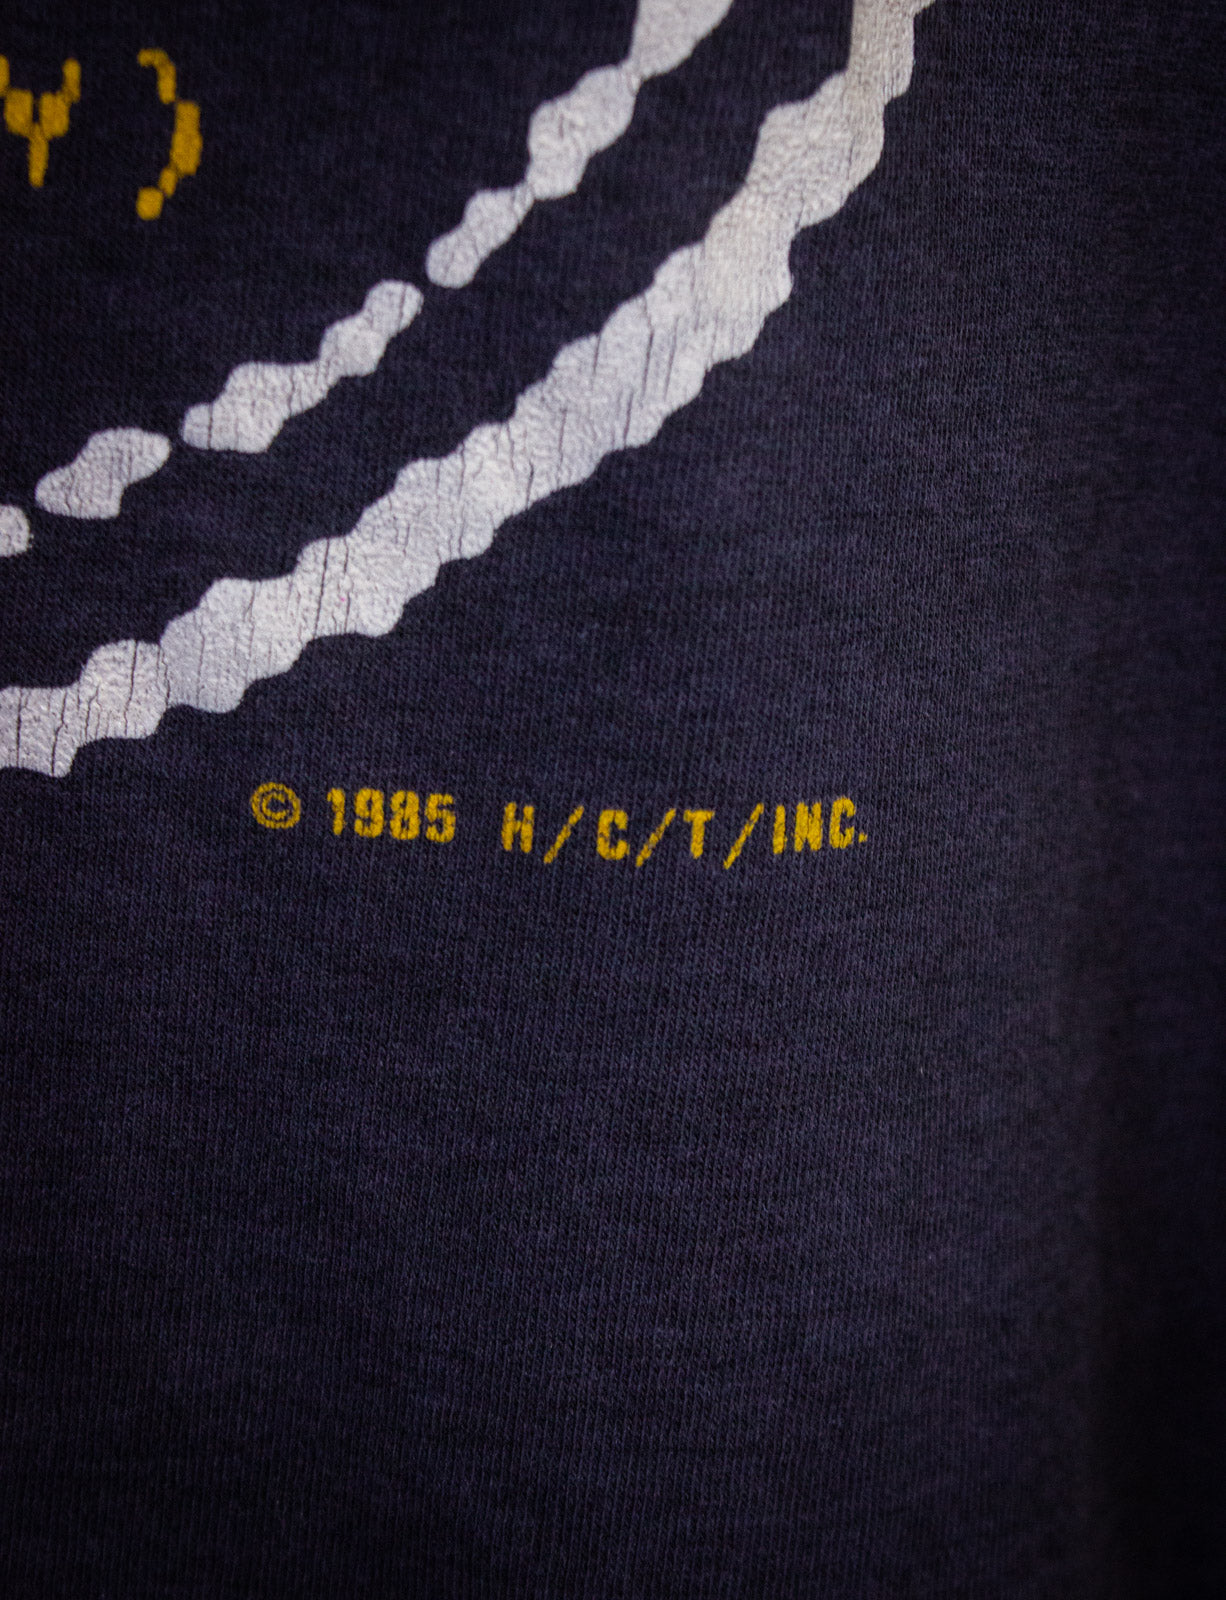 Vintage Fishbone ? (Modern Industry) Cropped Concert T Shirt Black XL